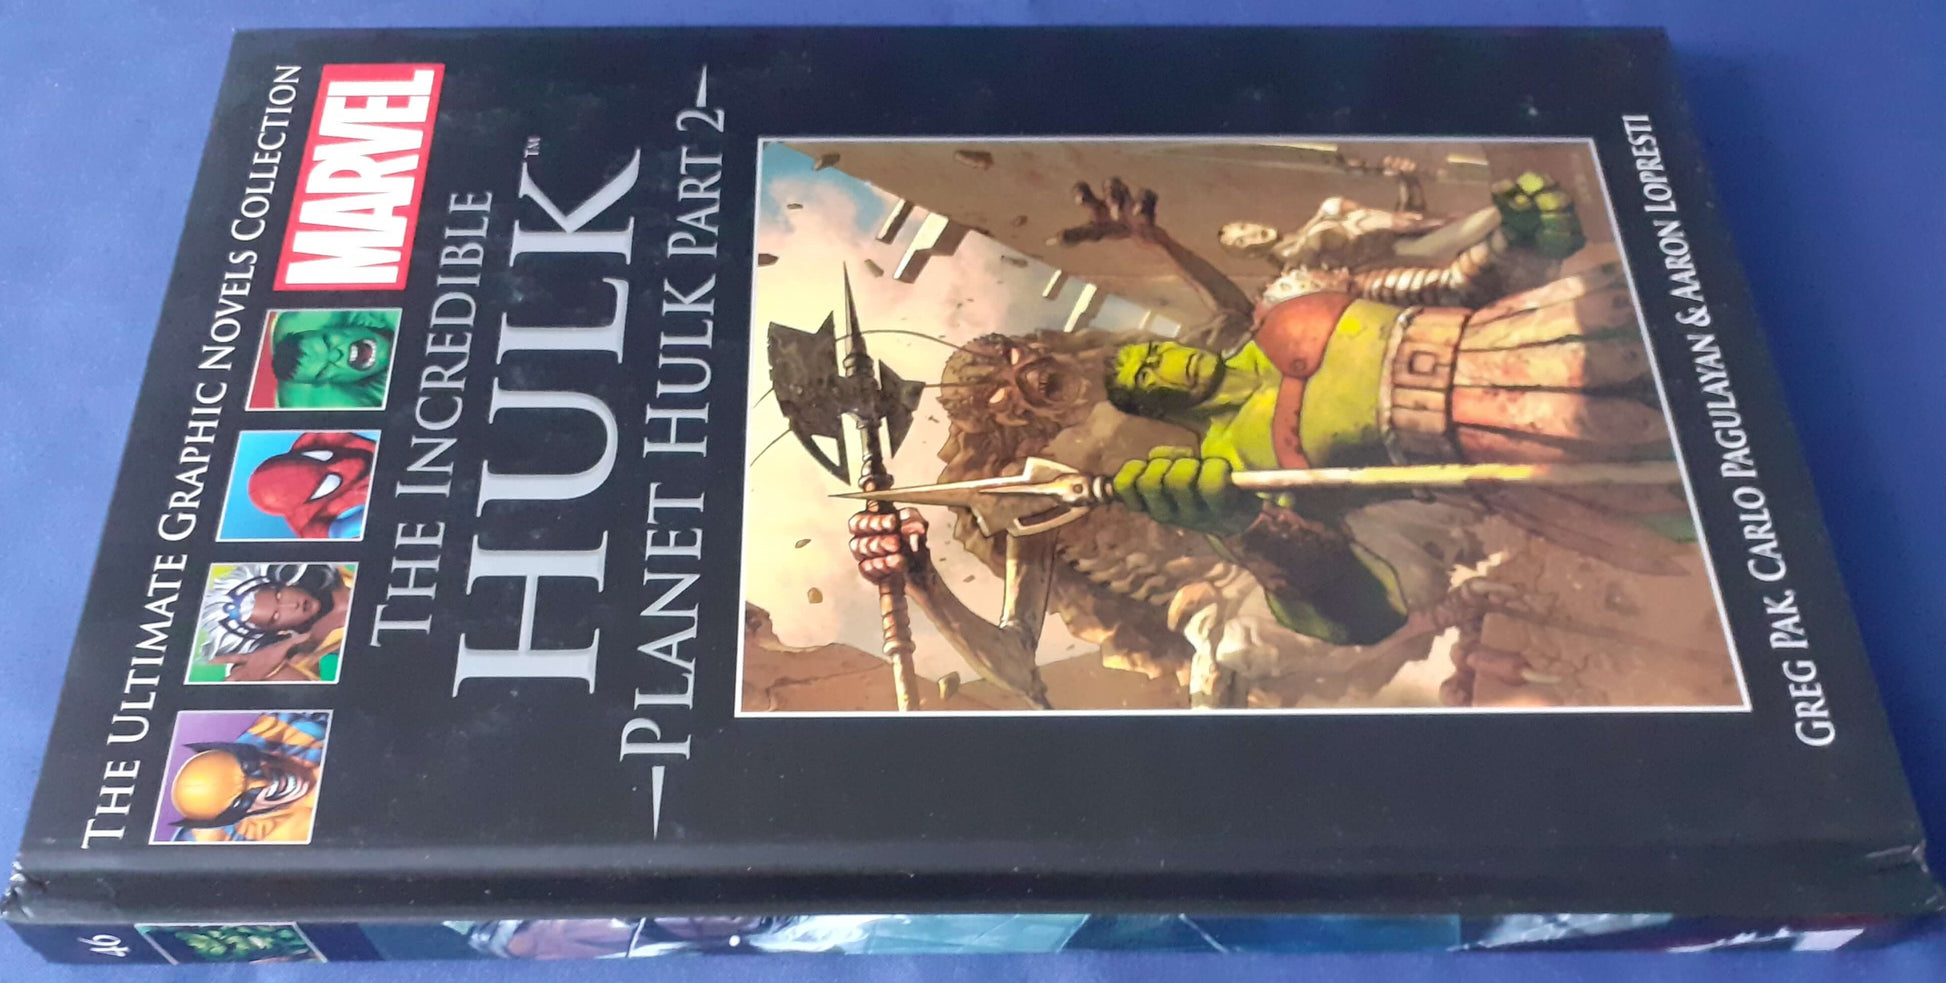 hulk, incredible hulk, marvel comics, marvel graphic novels, marvel ultimate graphic collection - Best Books